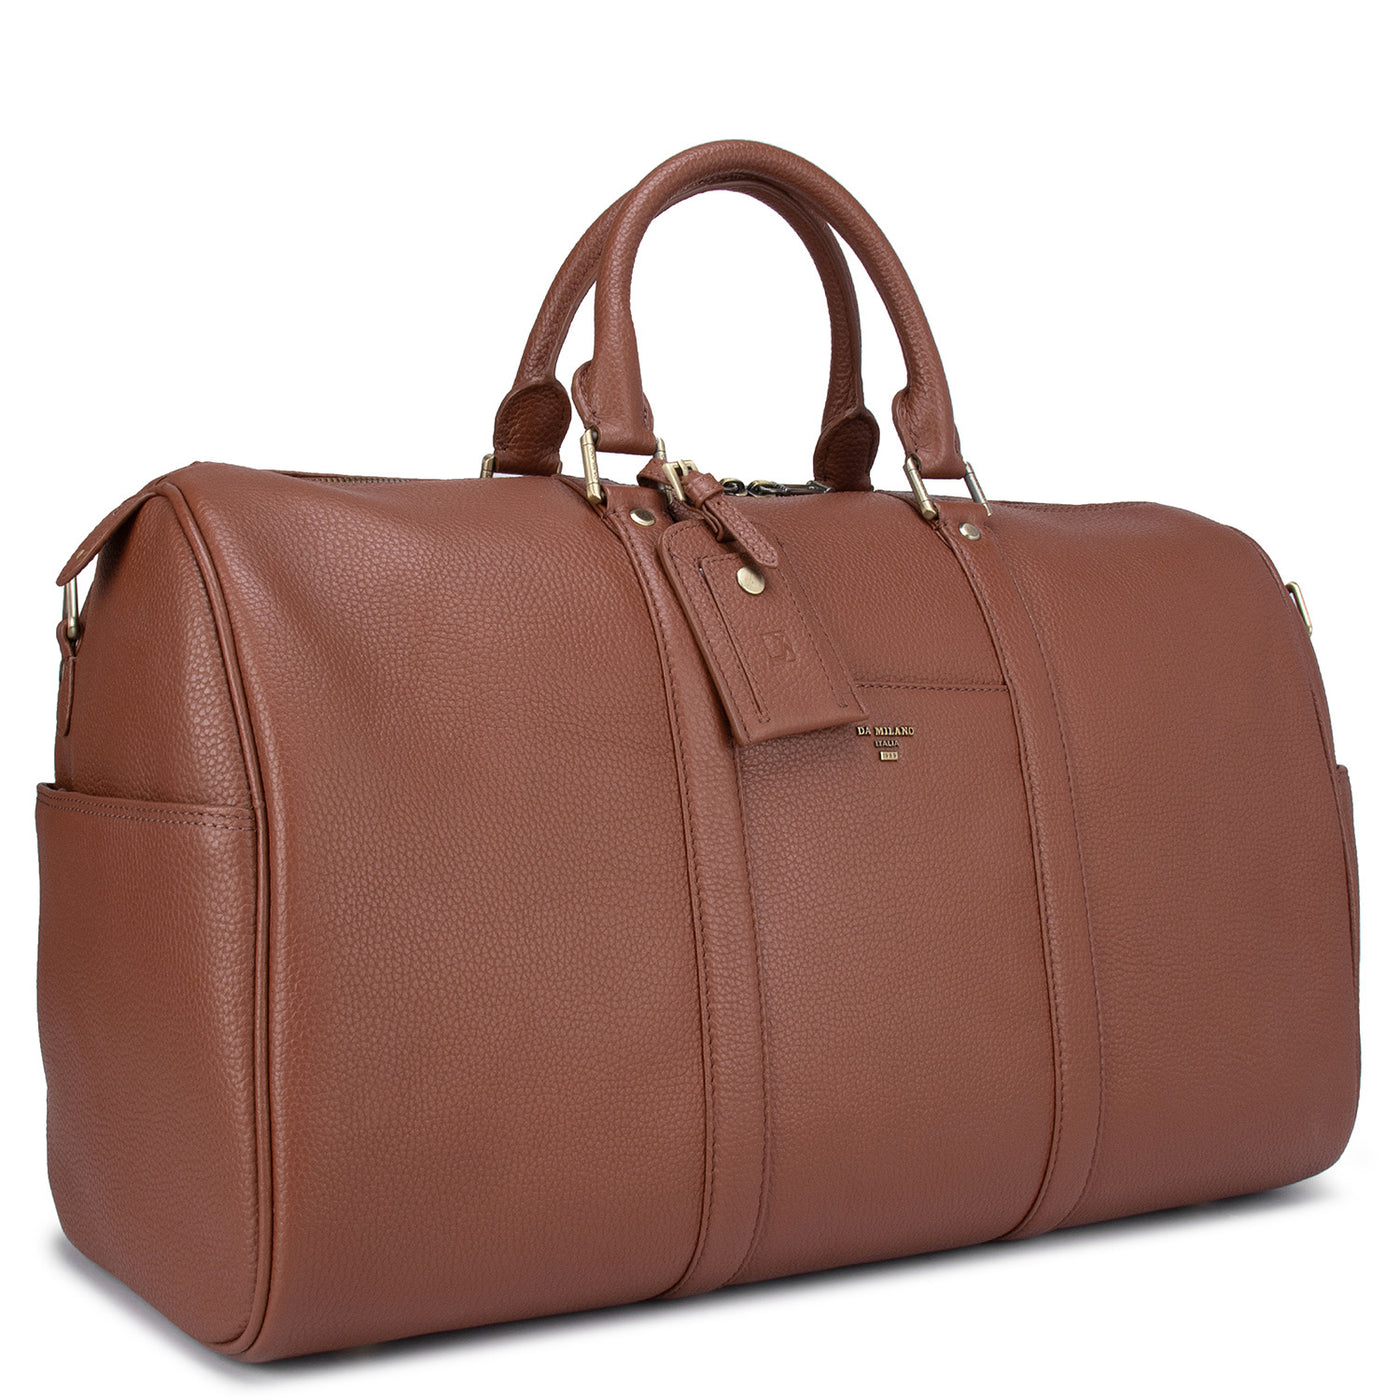 Wax Leather Luggage - Cognac